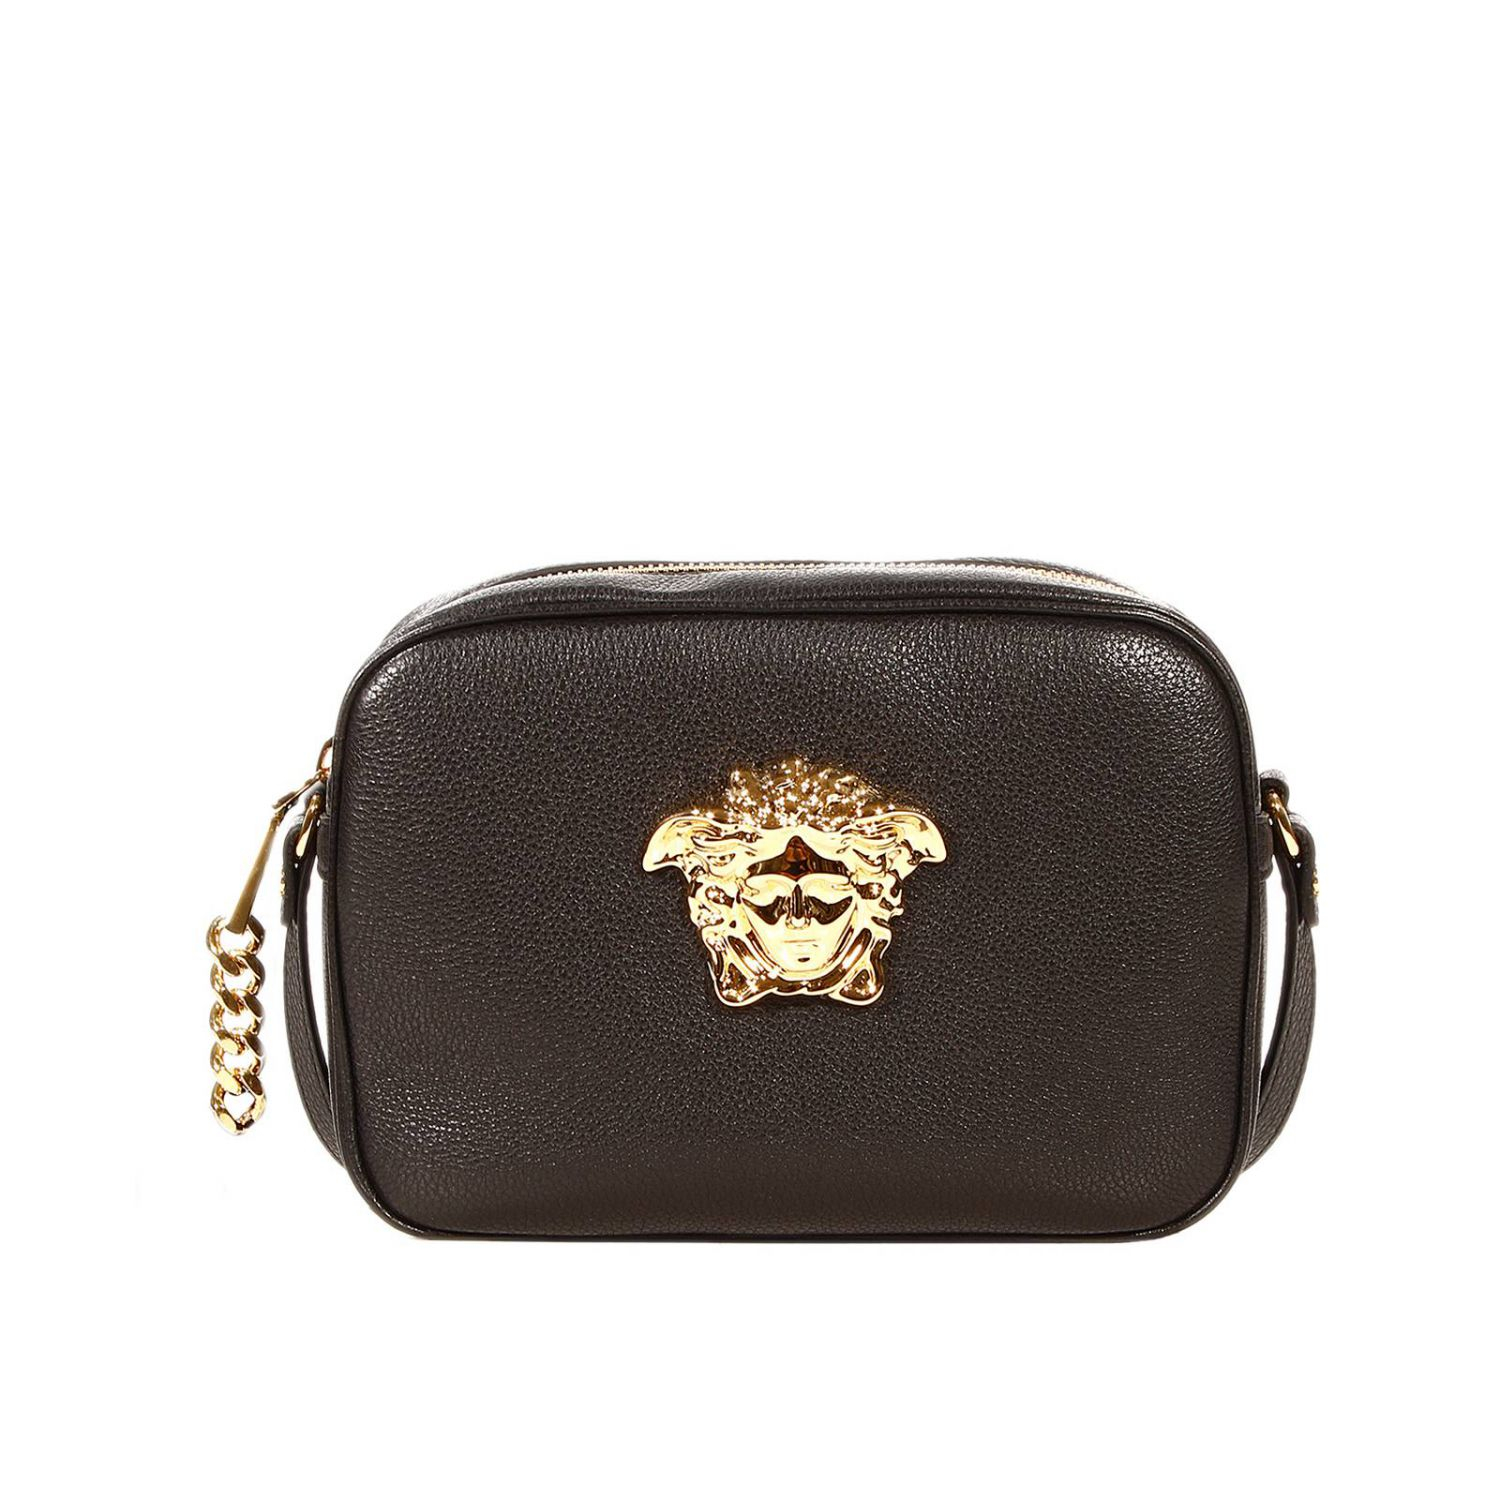 Versace Handbag Gramercy Cross Body in Leather with Medusa in Gold (Black) | Lyst